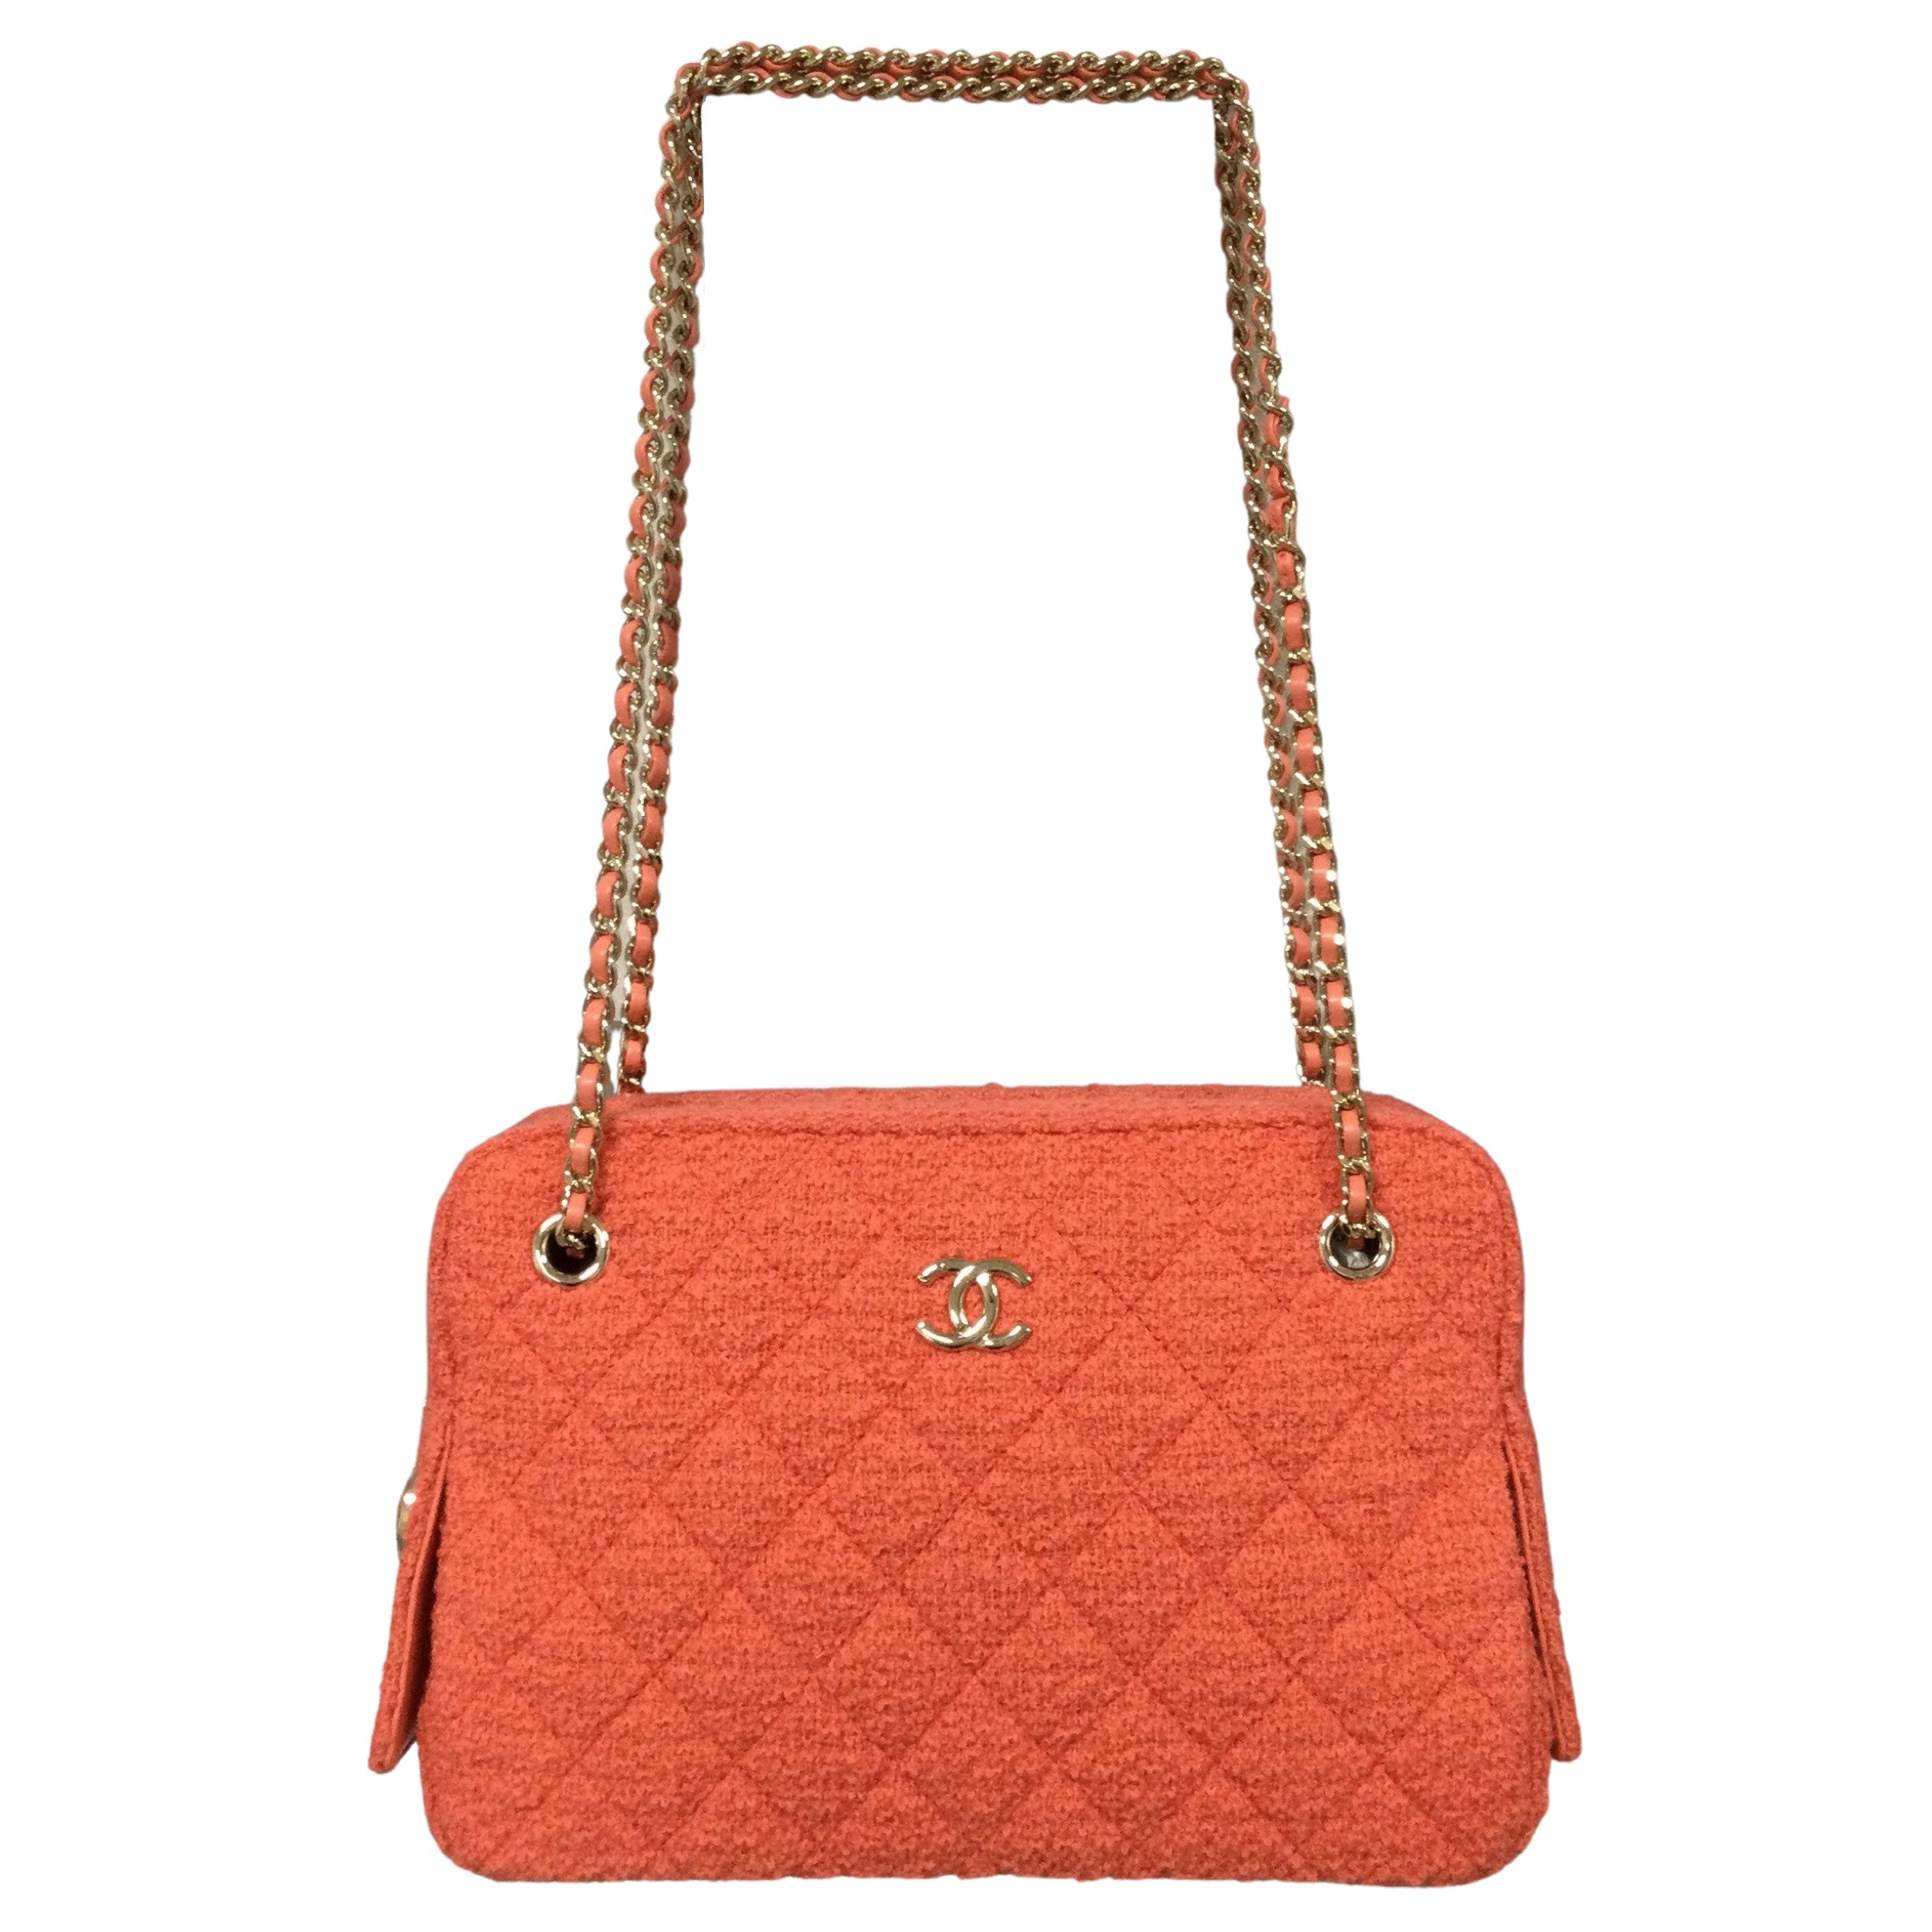 Handbags Chanel Chanel Boucle 2020 Bright Coral Knit Shoulder Bag